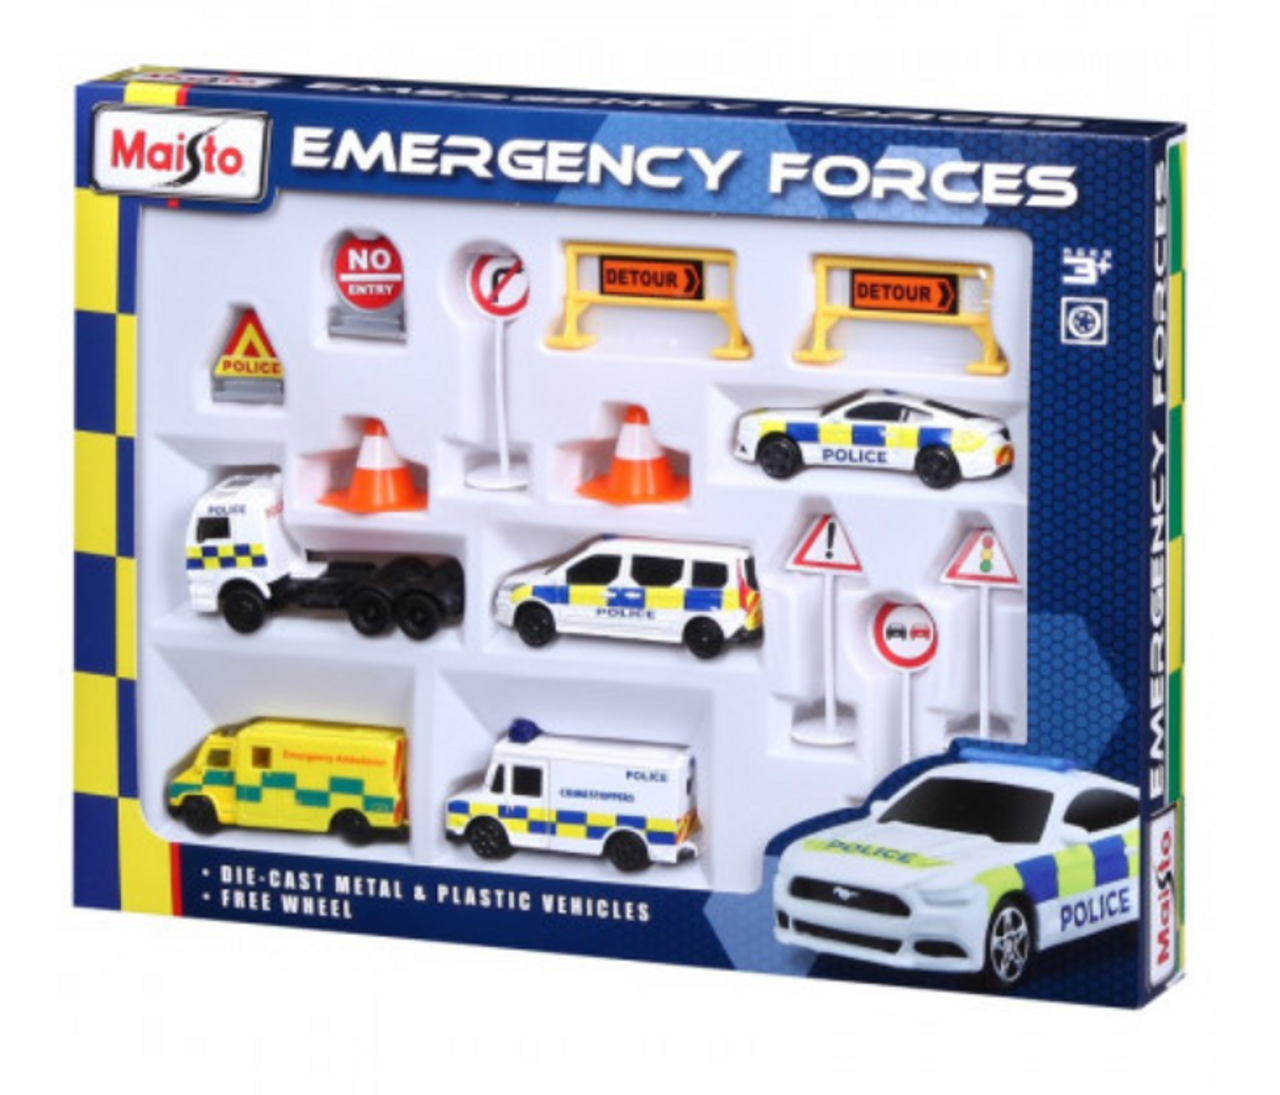 Maisto Emergency Police and Ambulance Children's Car Toy Playset